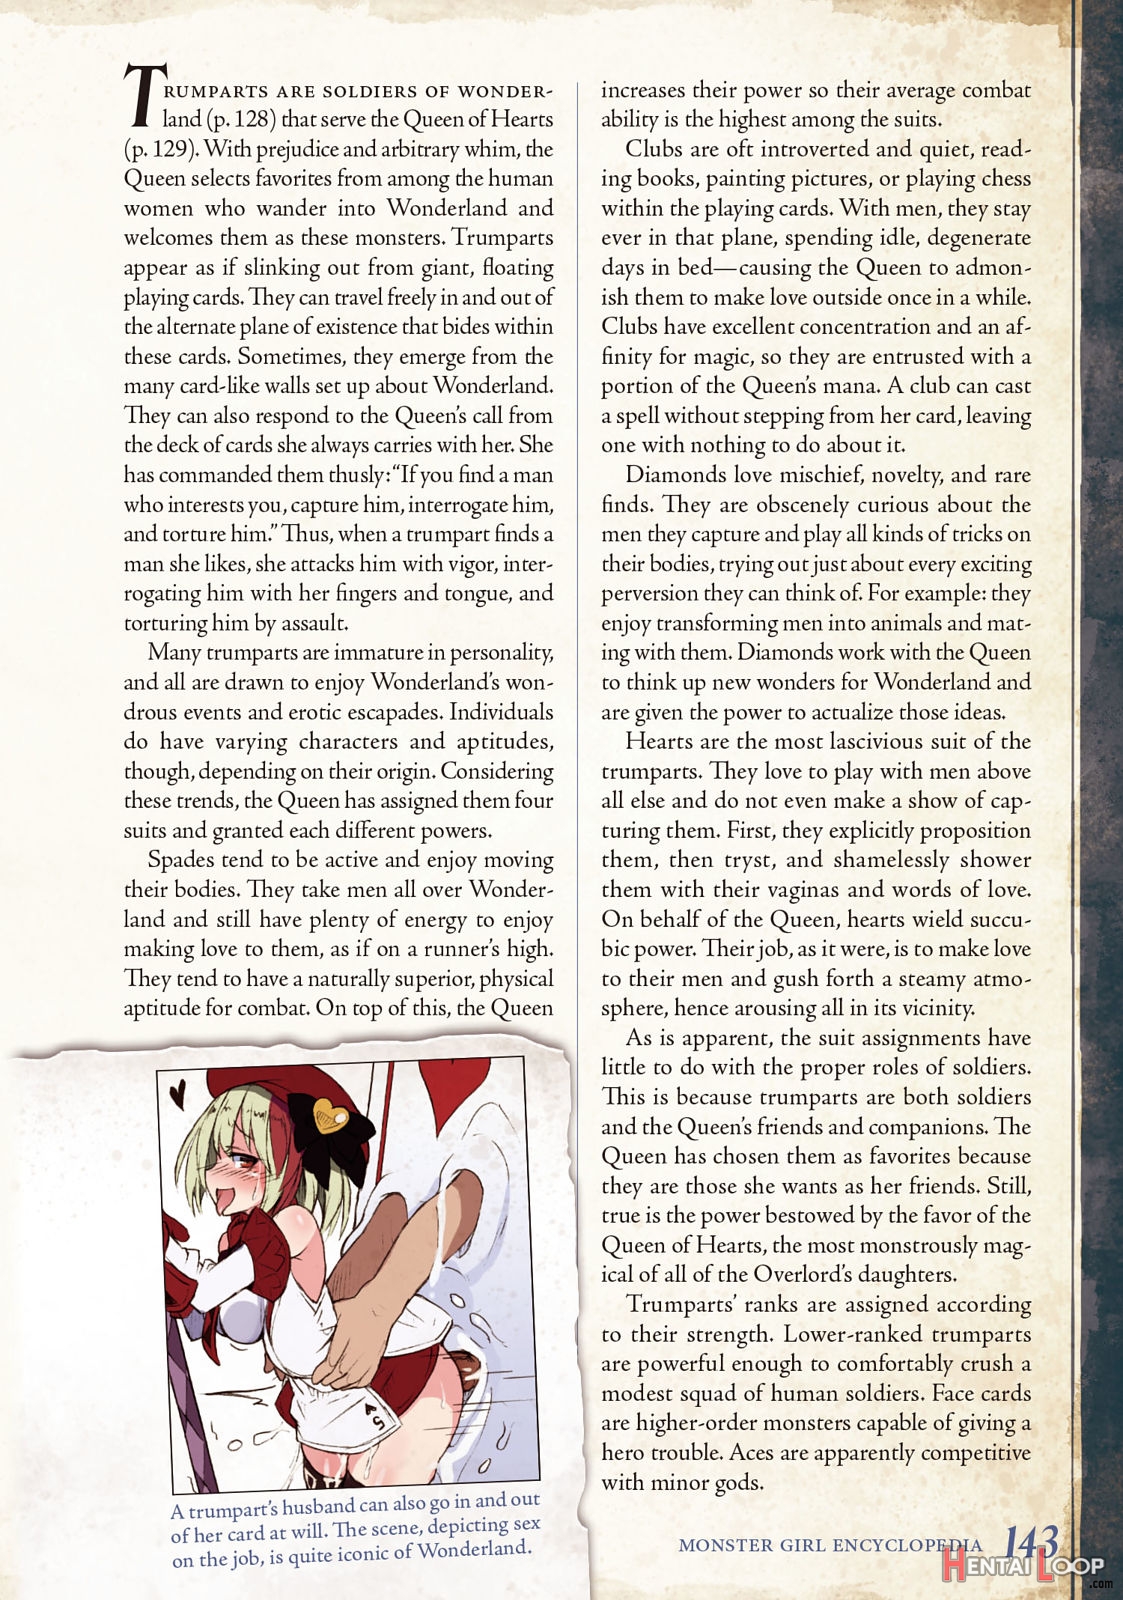 Monster Girl Encyclopedia Vol. 2 page 144